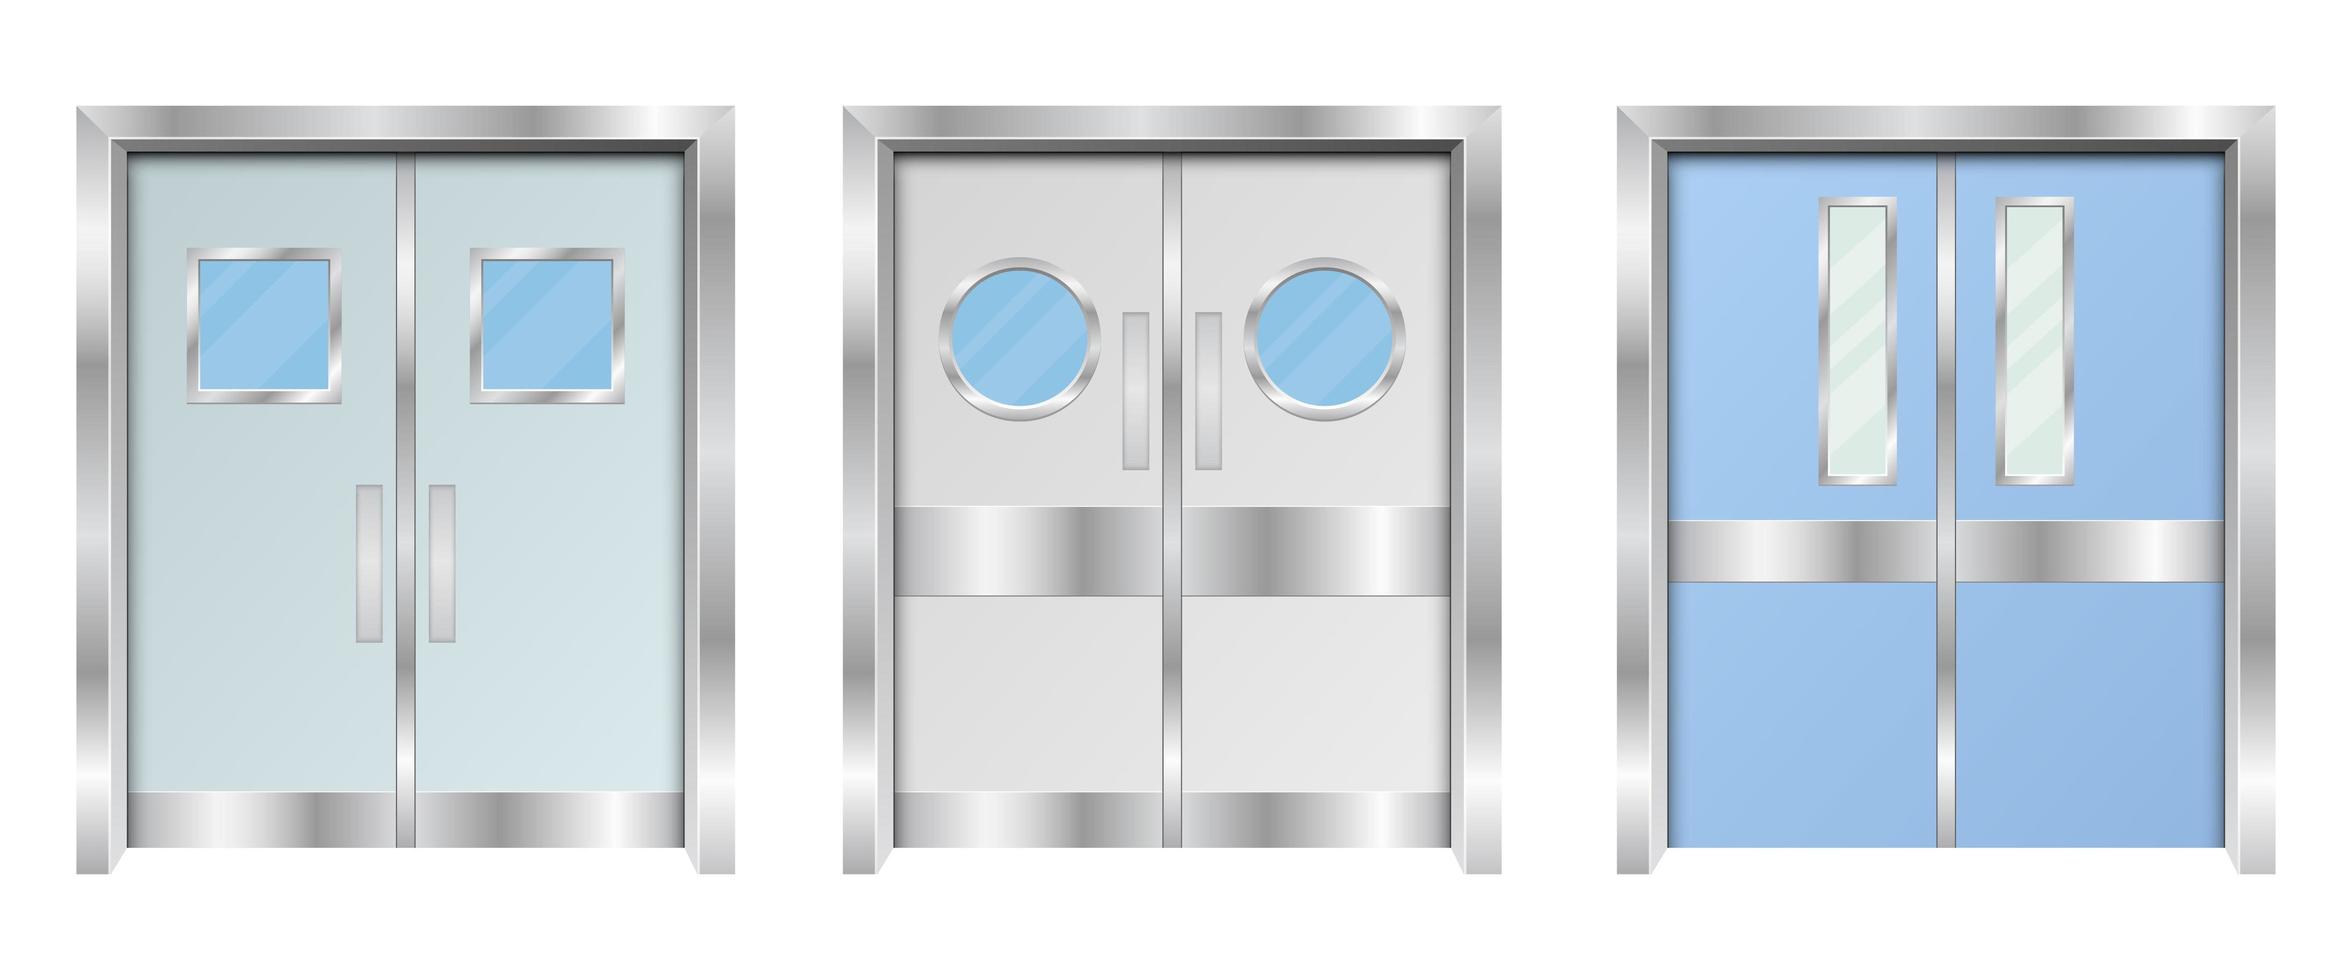 Hospital double doors vector design illustration isolated on white background